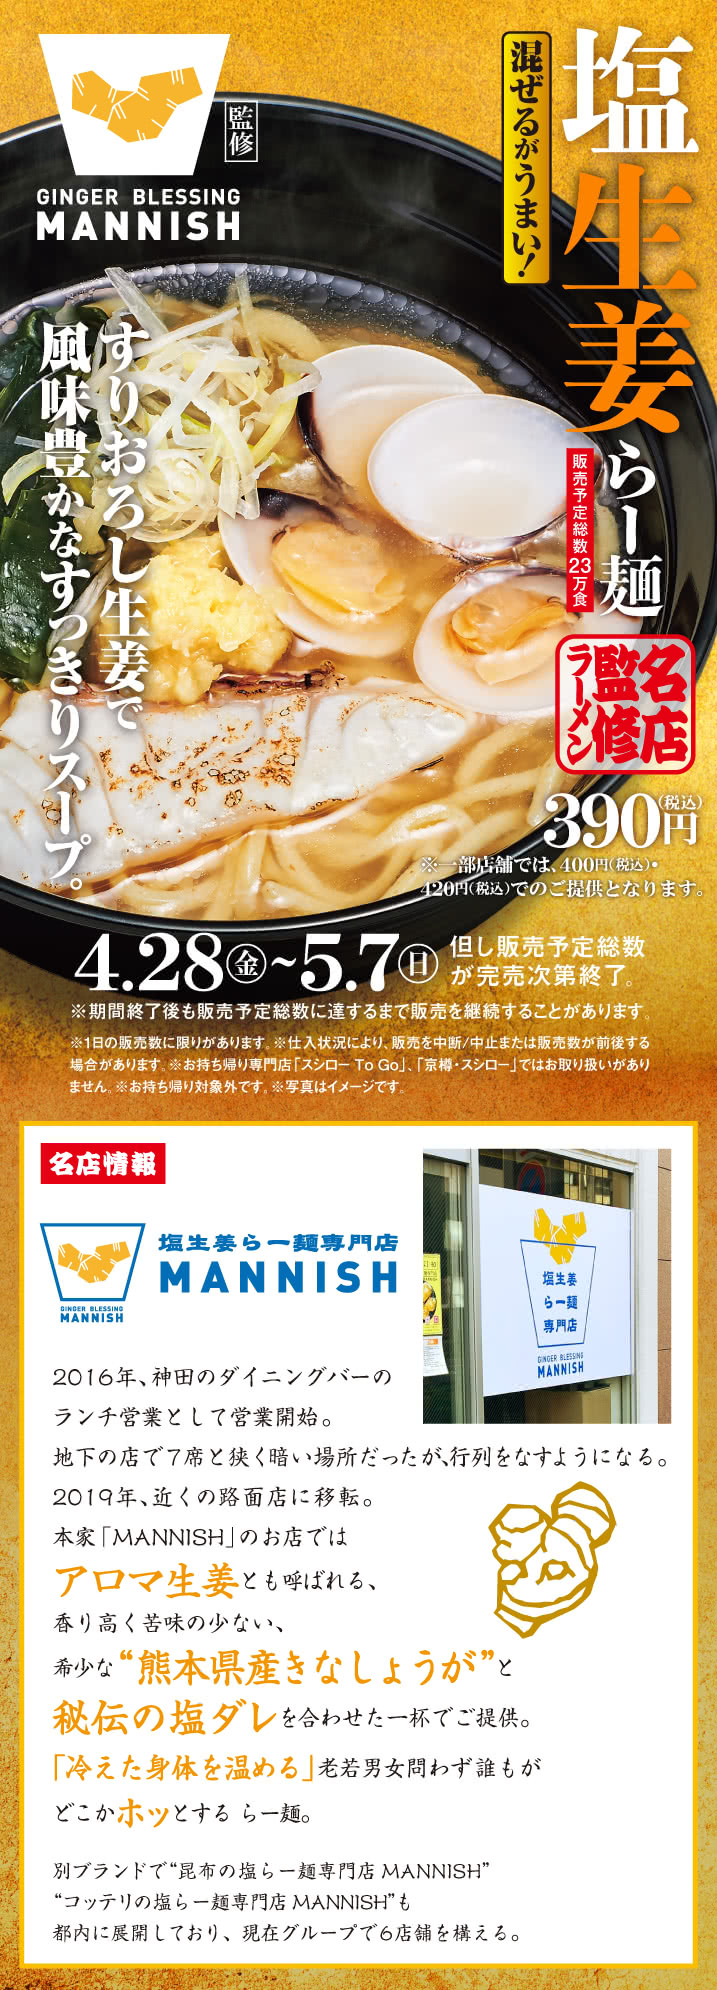 日本スシロー／壽司郎新菜單「MANNISH」監修「塩生姜らー麺」4/28 至 5/7 期間限定販售中